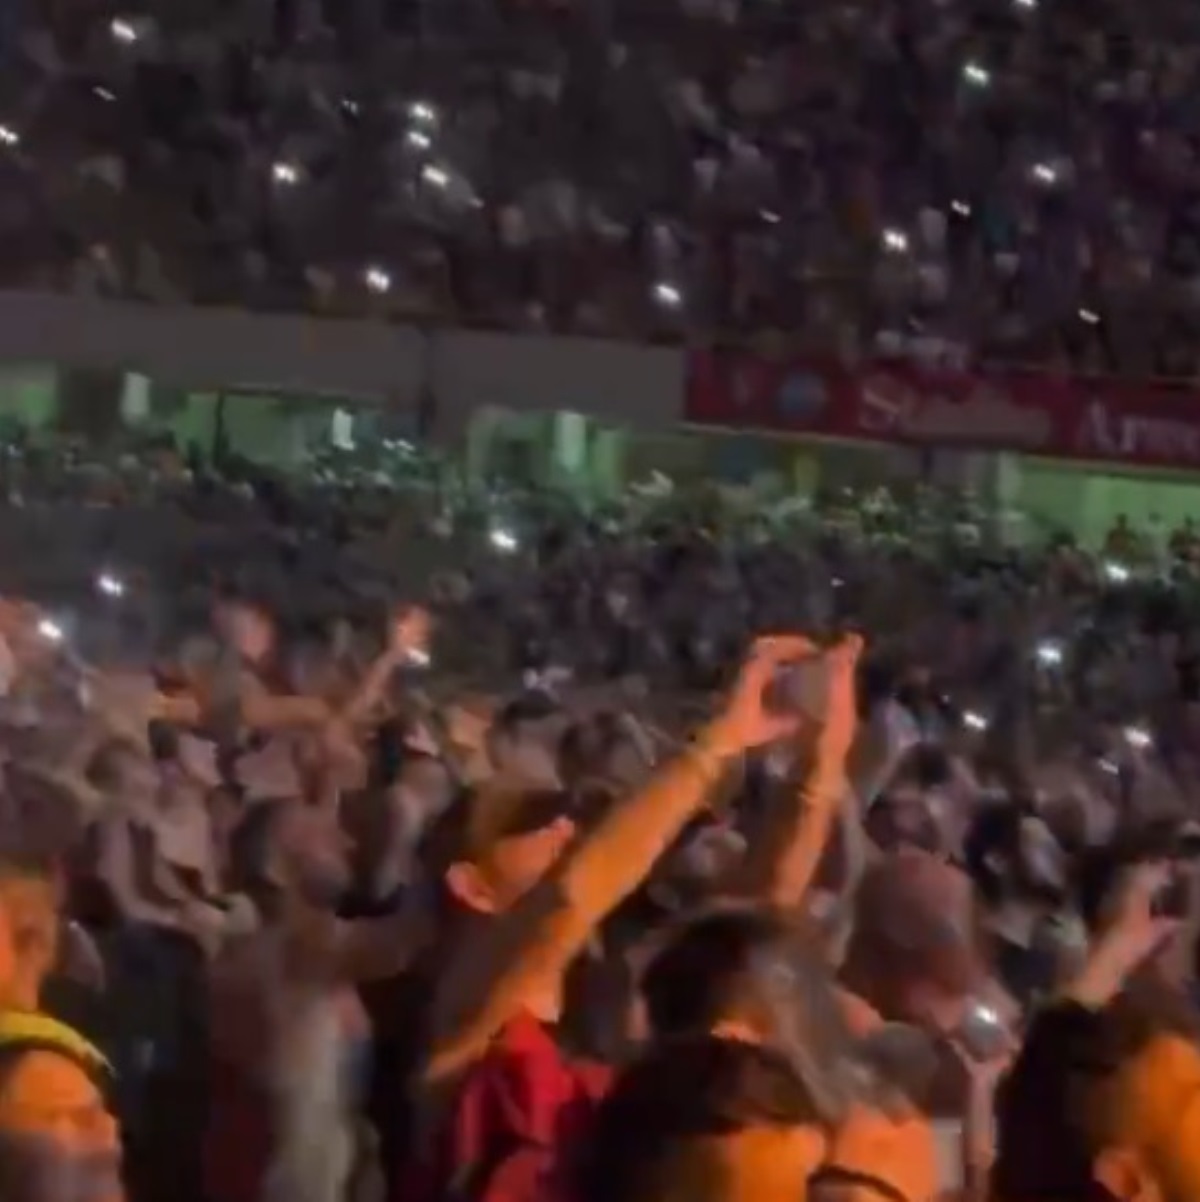 vasco rossi scena sesso durante concerto video